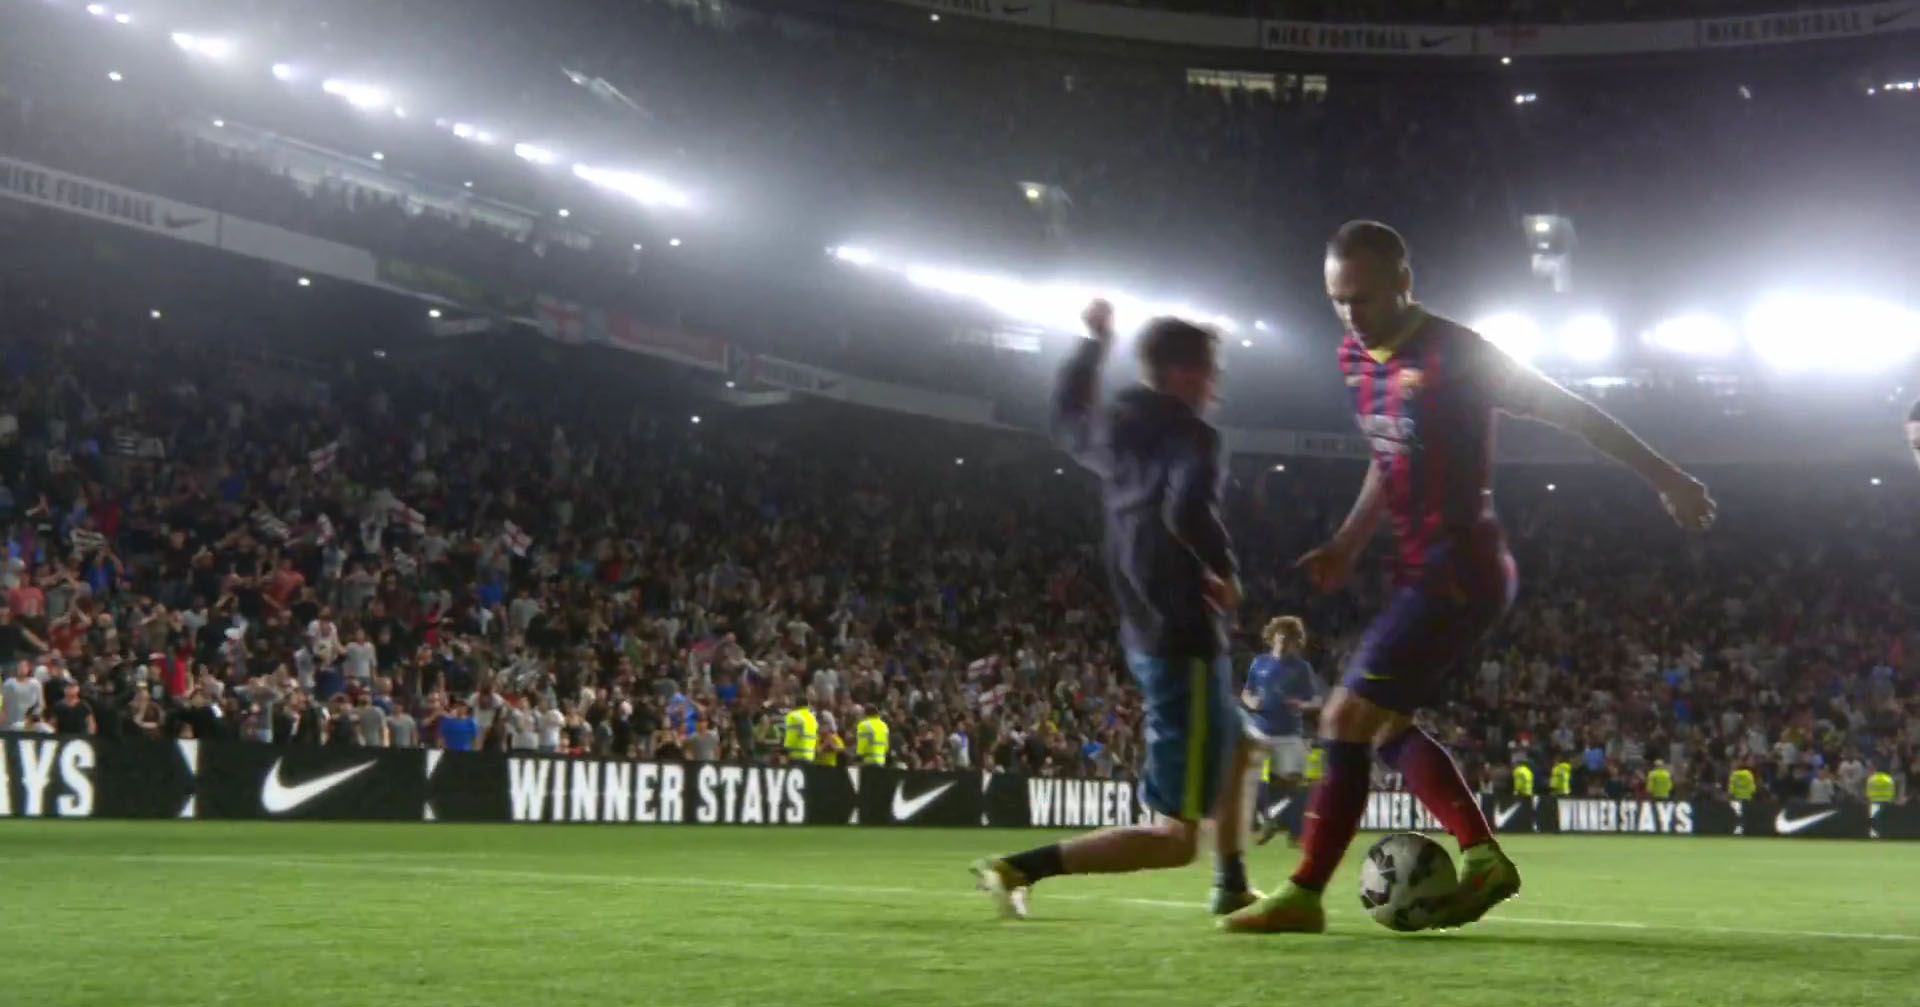 Iniesta dribbling trick in Nike's new video ad